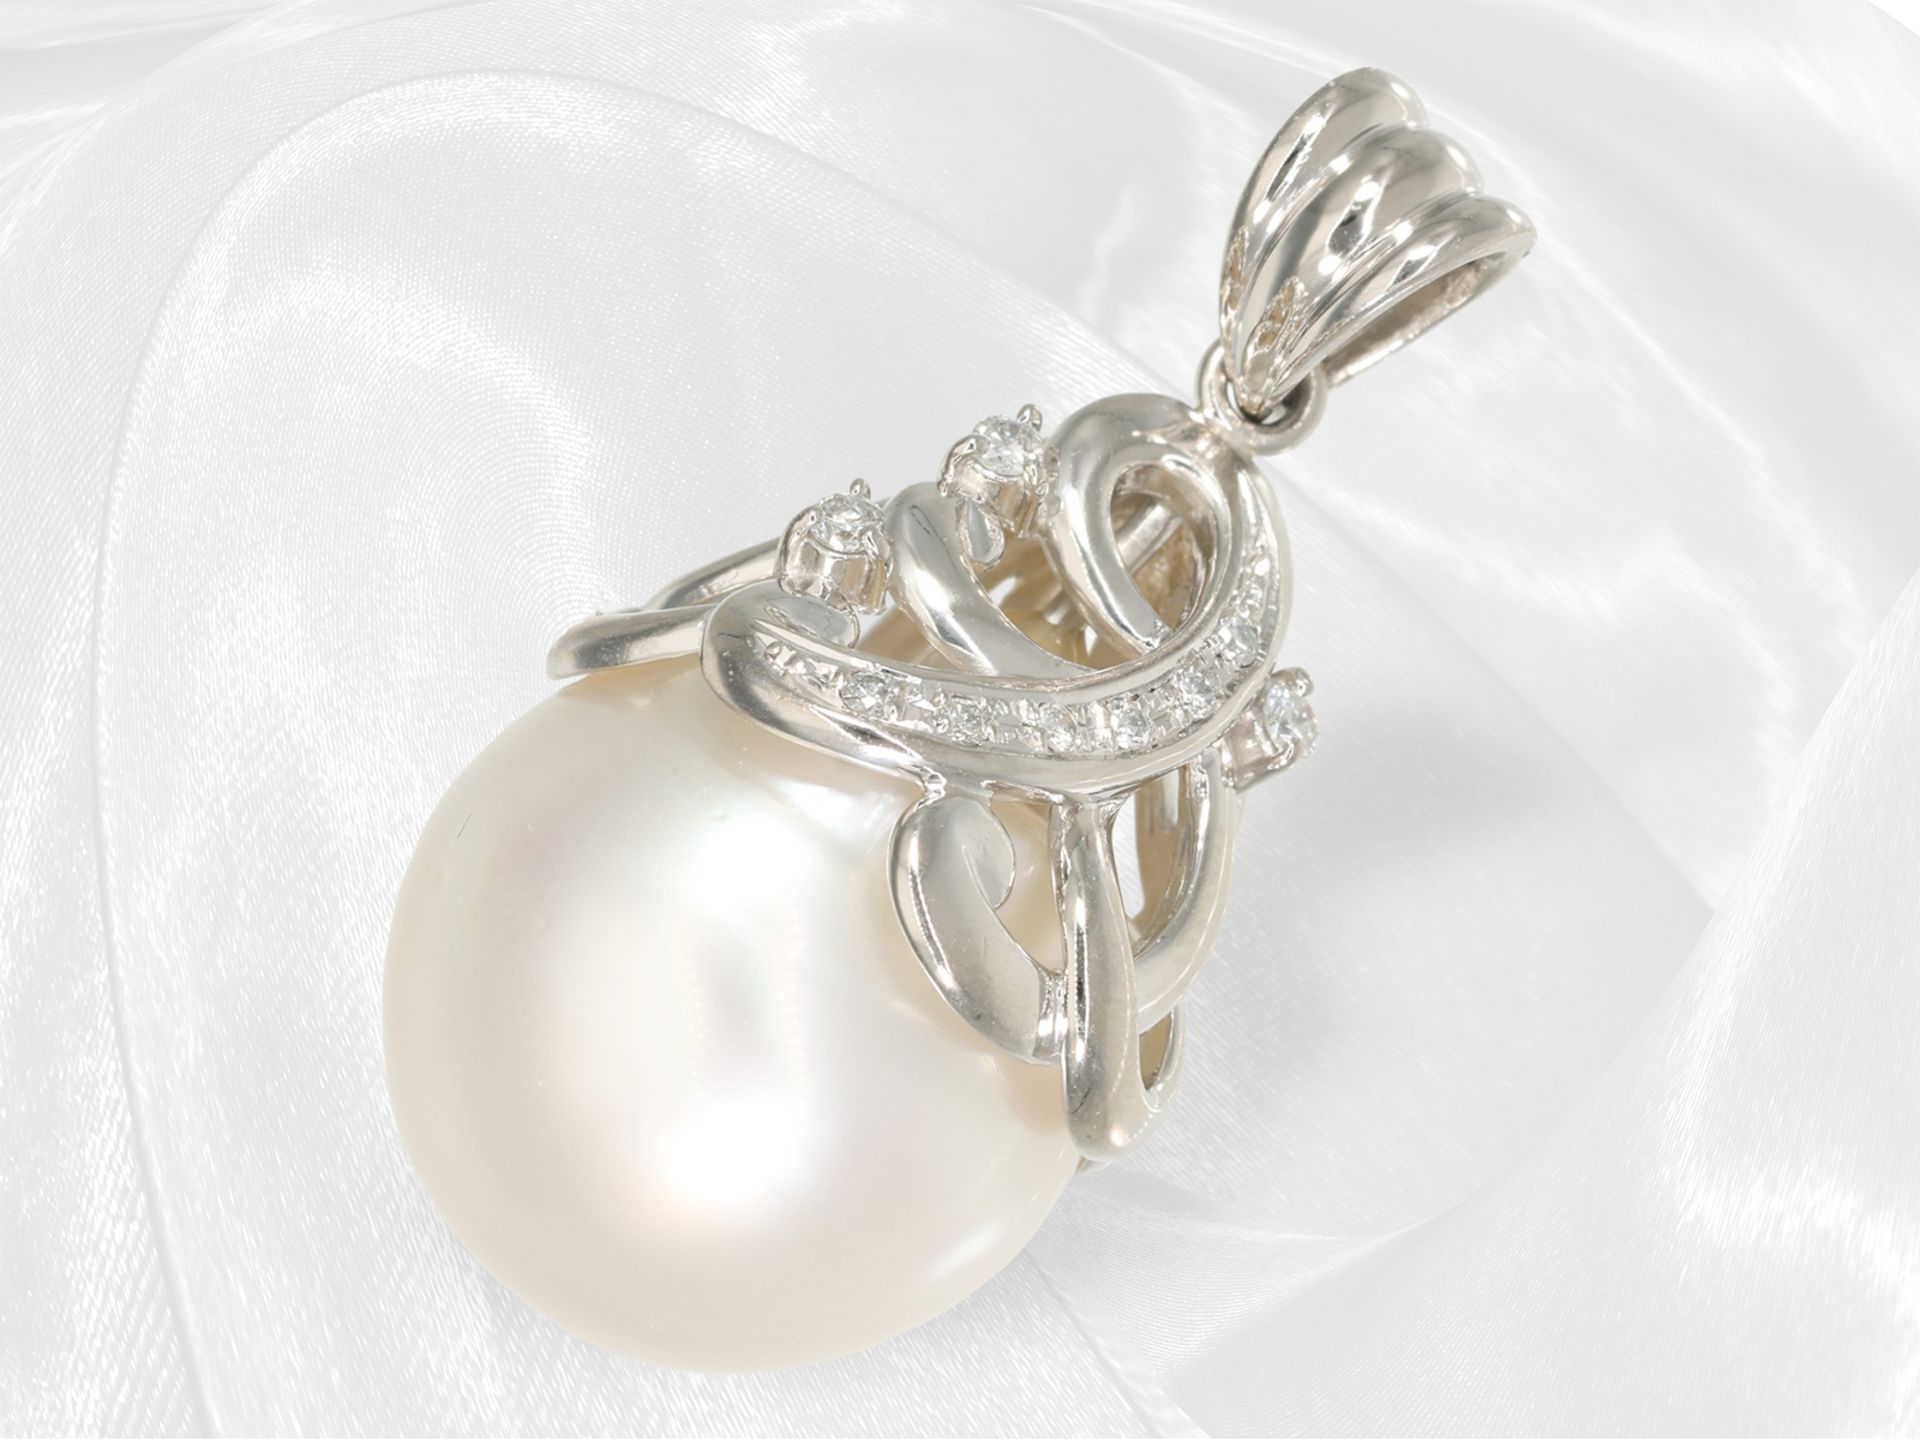 Beautiful unworn platinum South Sea pearl pendant with brilliant-cut diamonds - Image 6 of 10